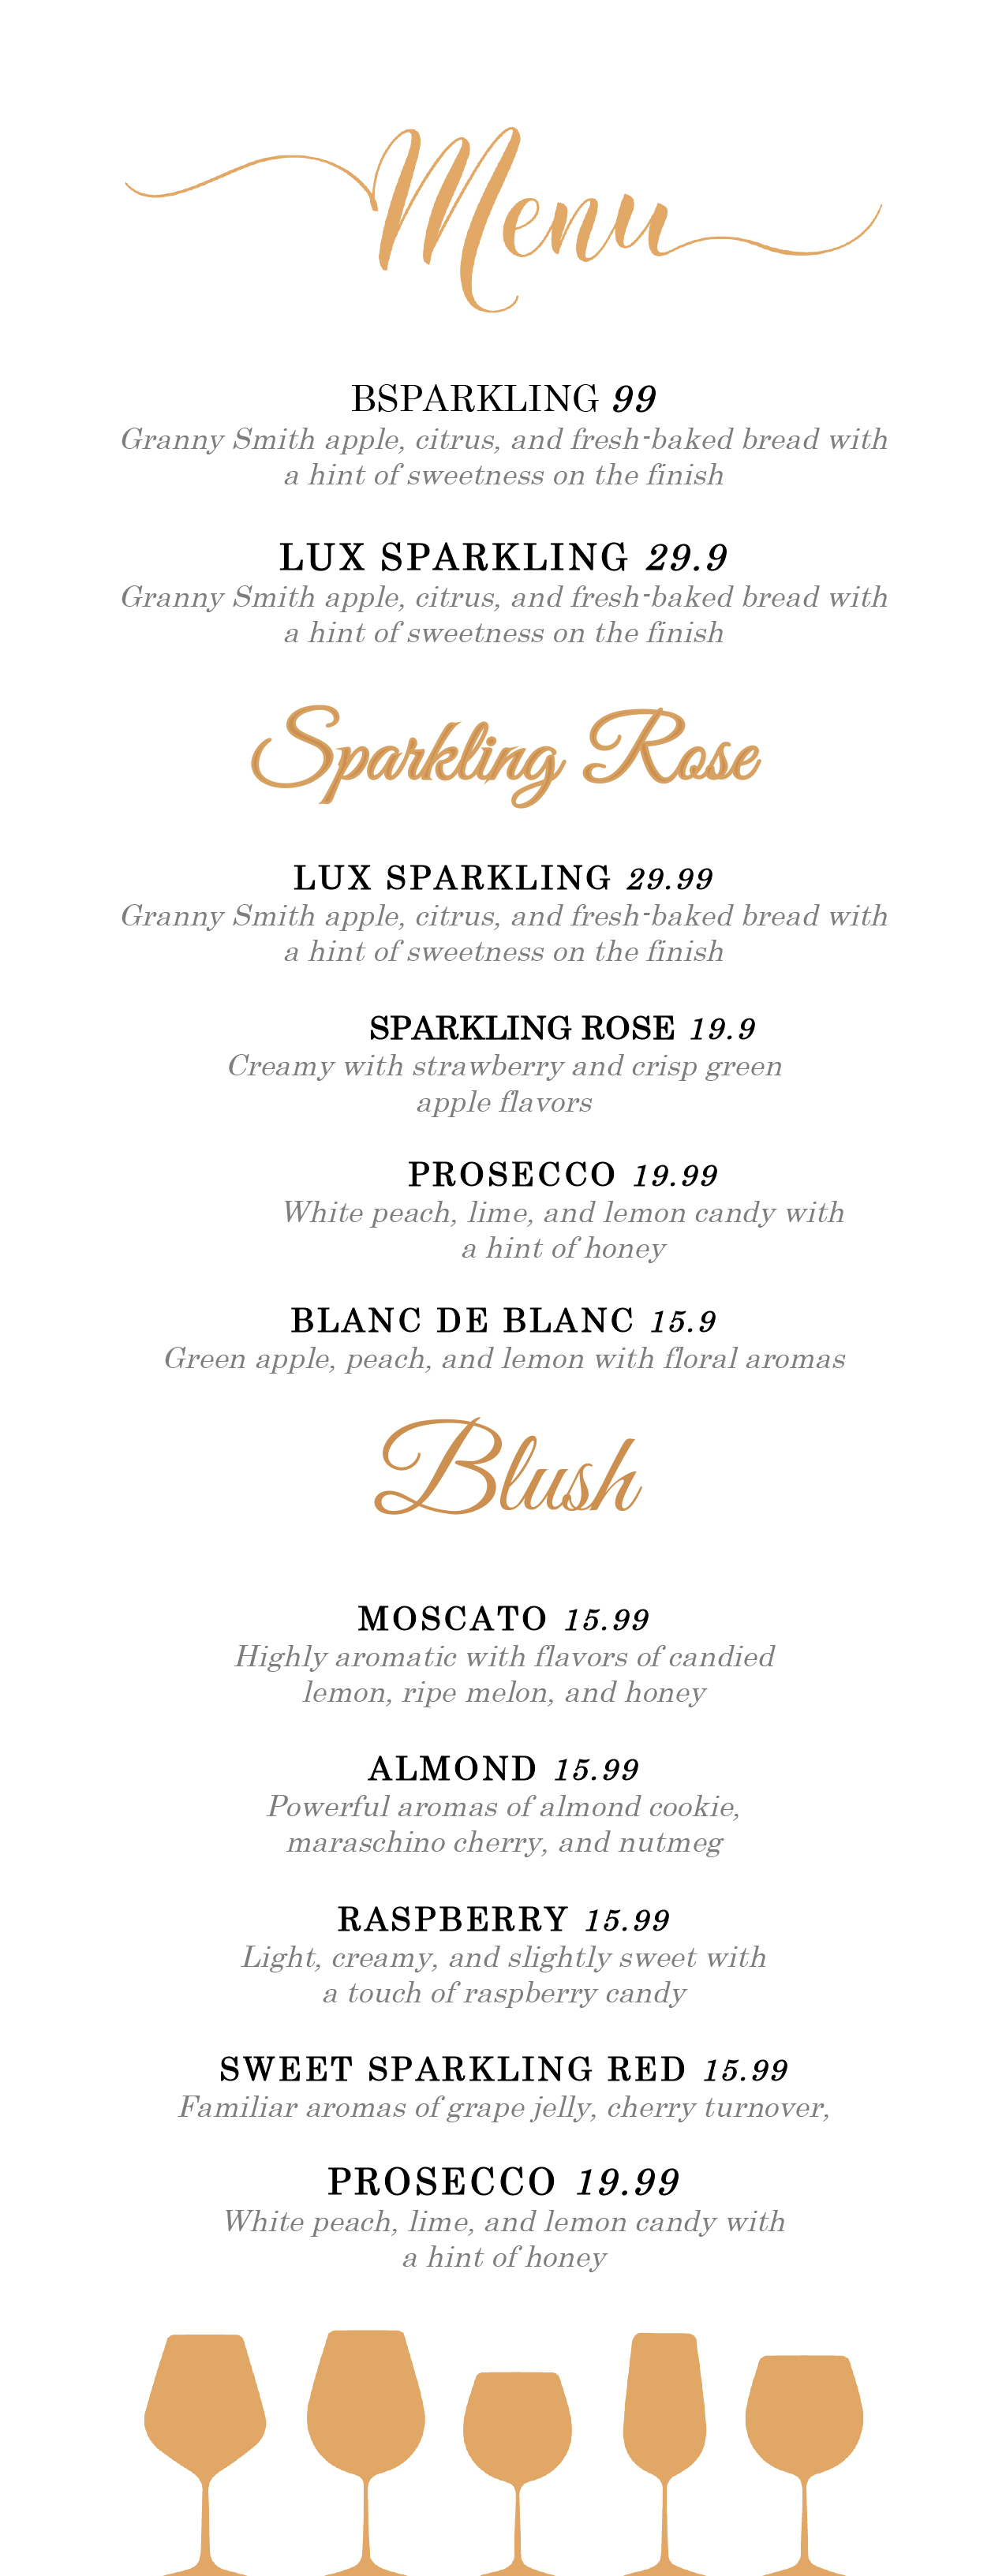 wine menu